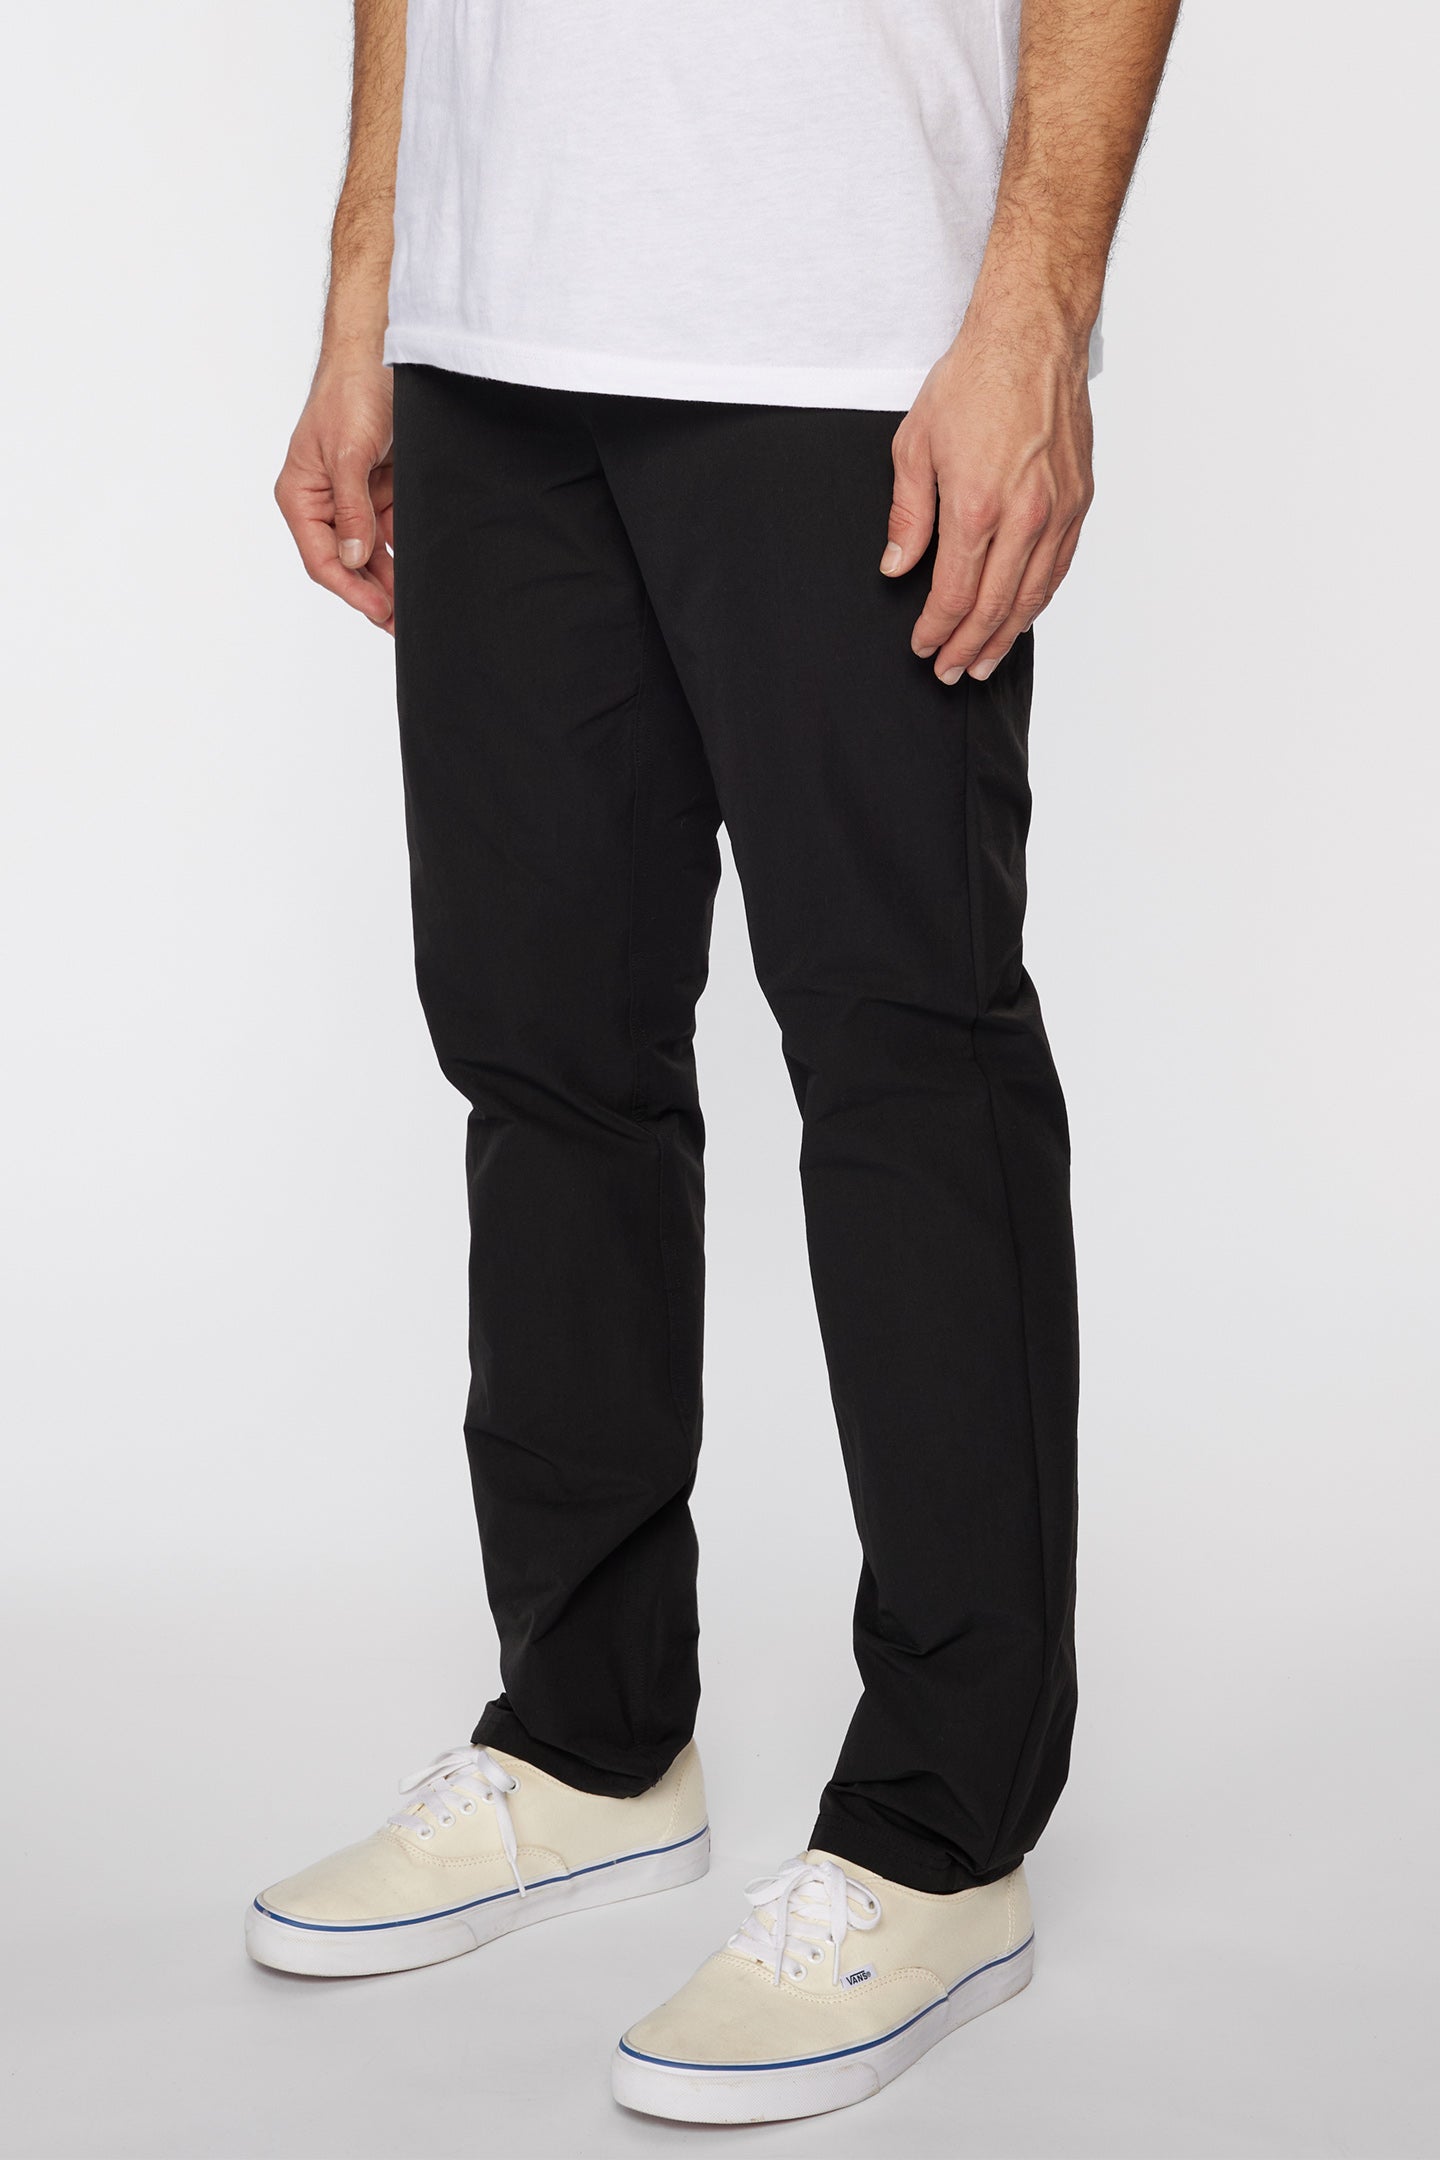 TRVLR Coast Hybrid Pants - Black | O'Neill